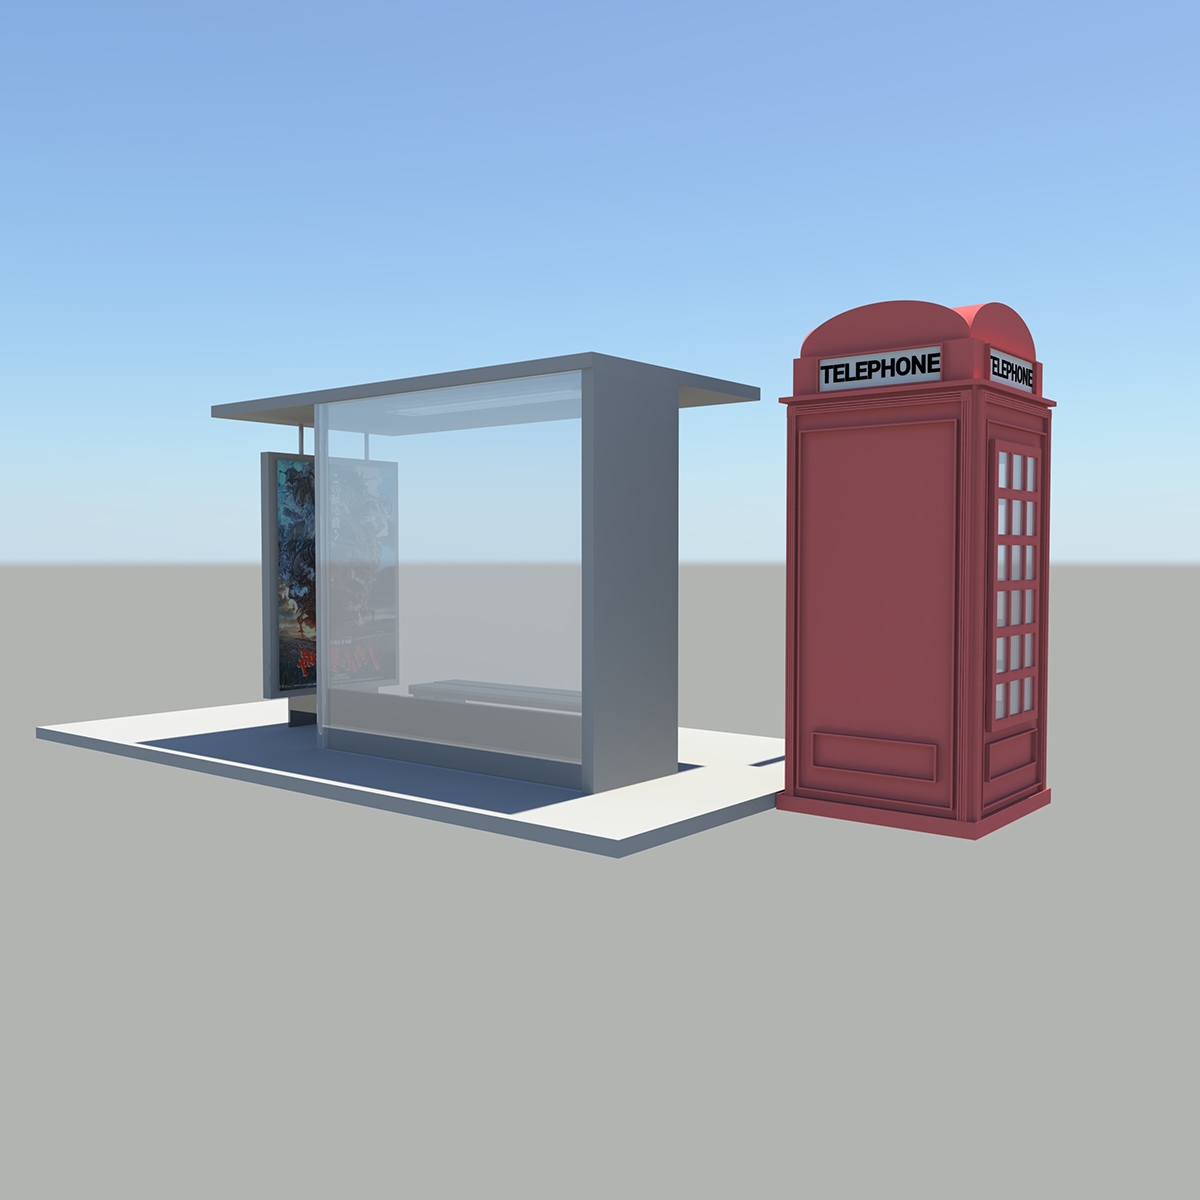 London telephone bus stop